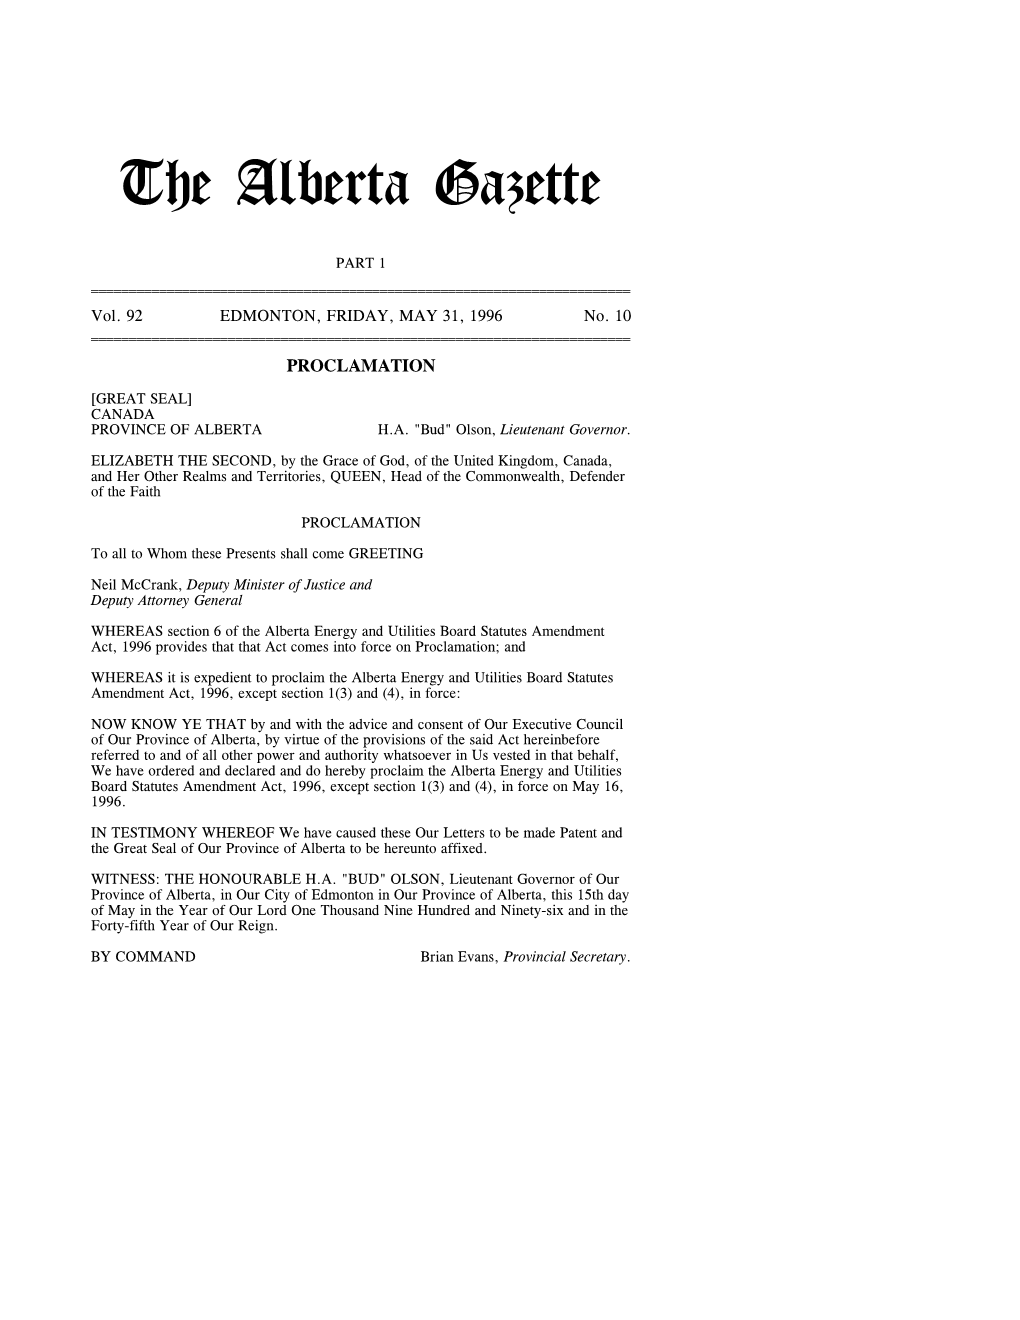 The Alberta Gazette, Part I, May 31, 1996